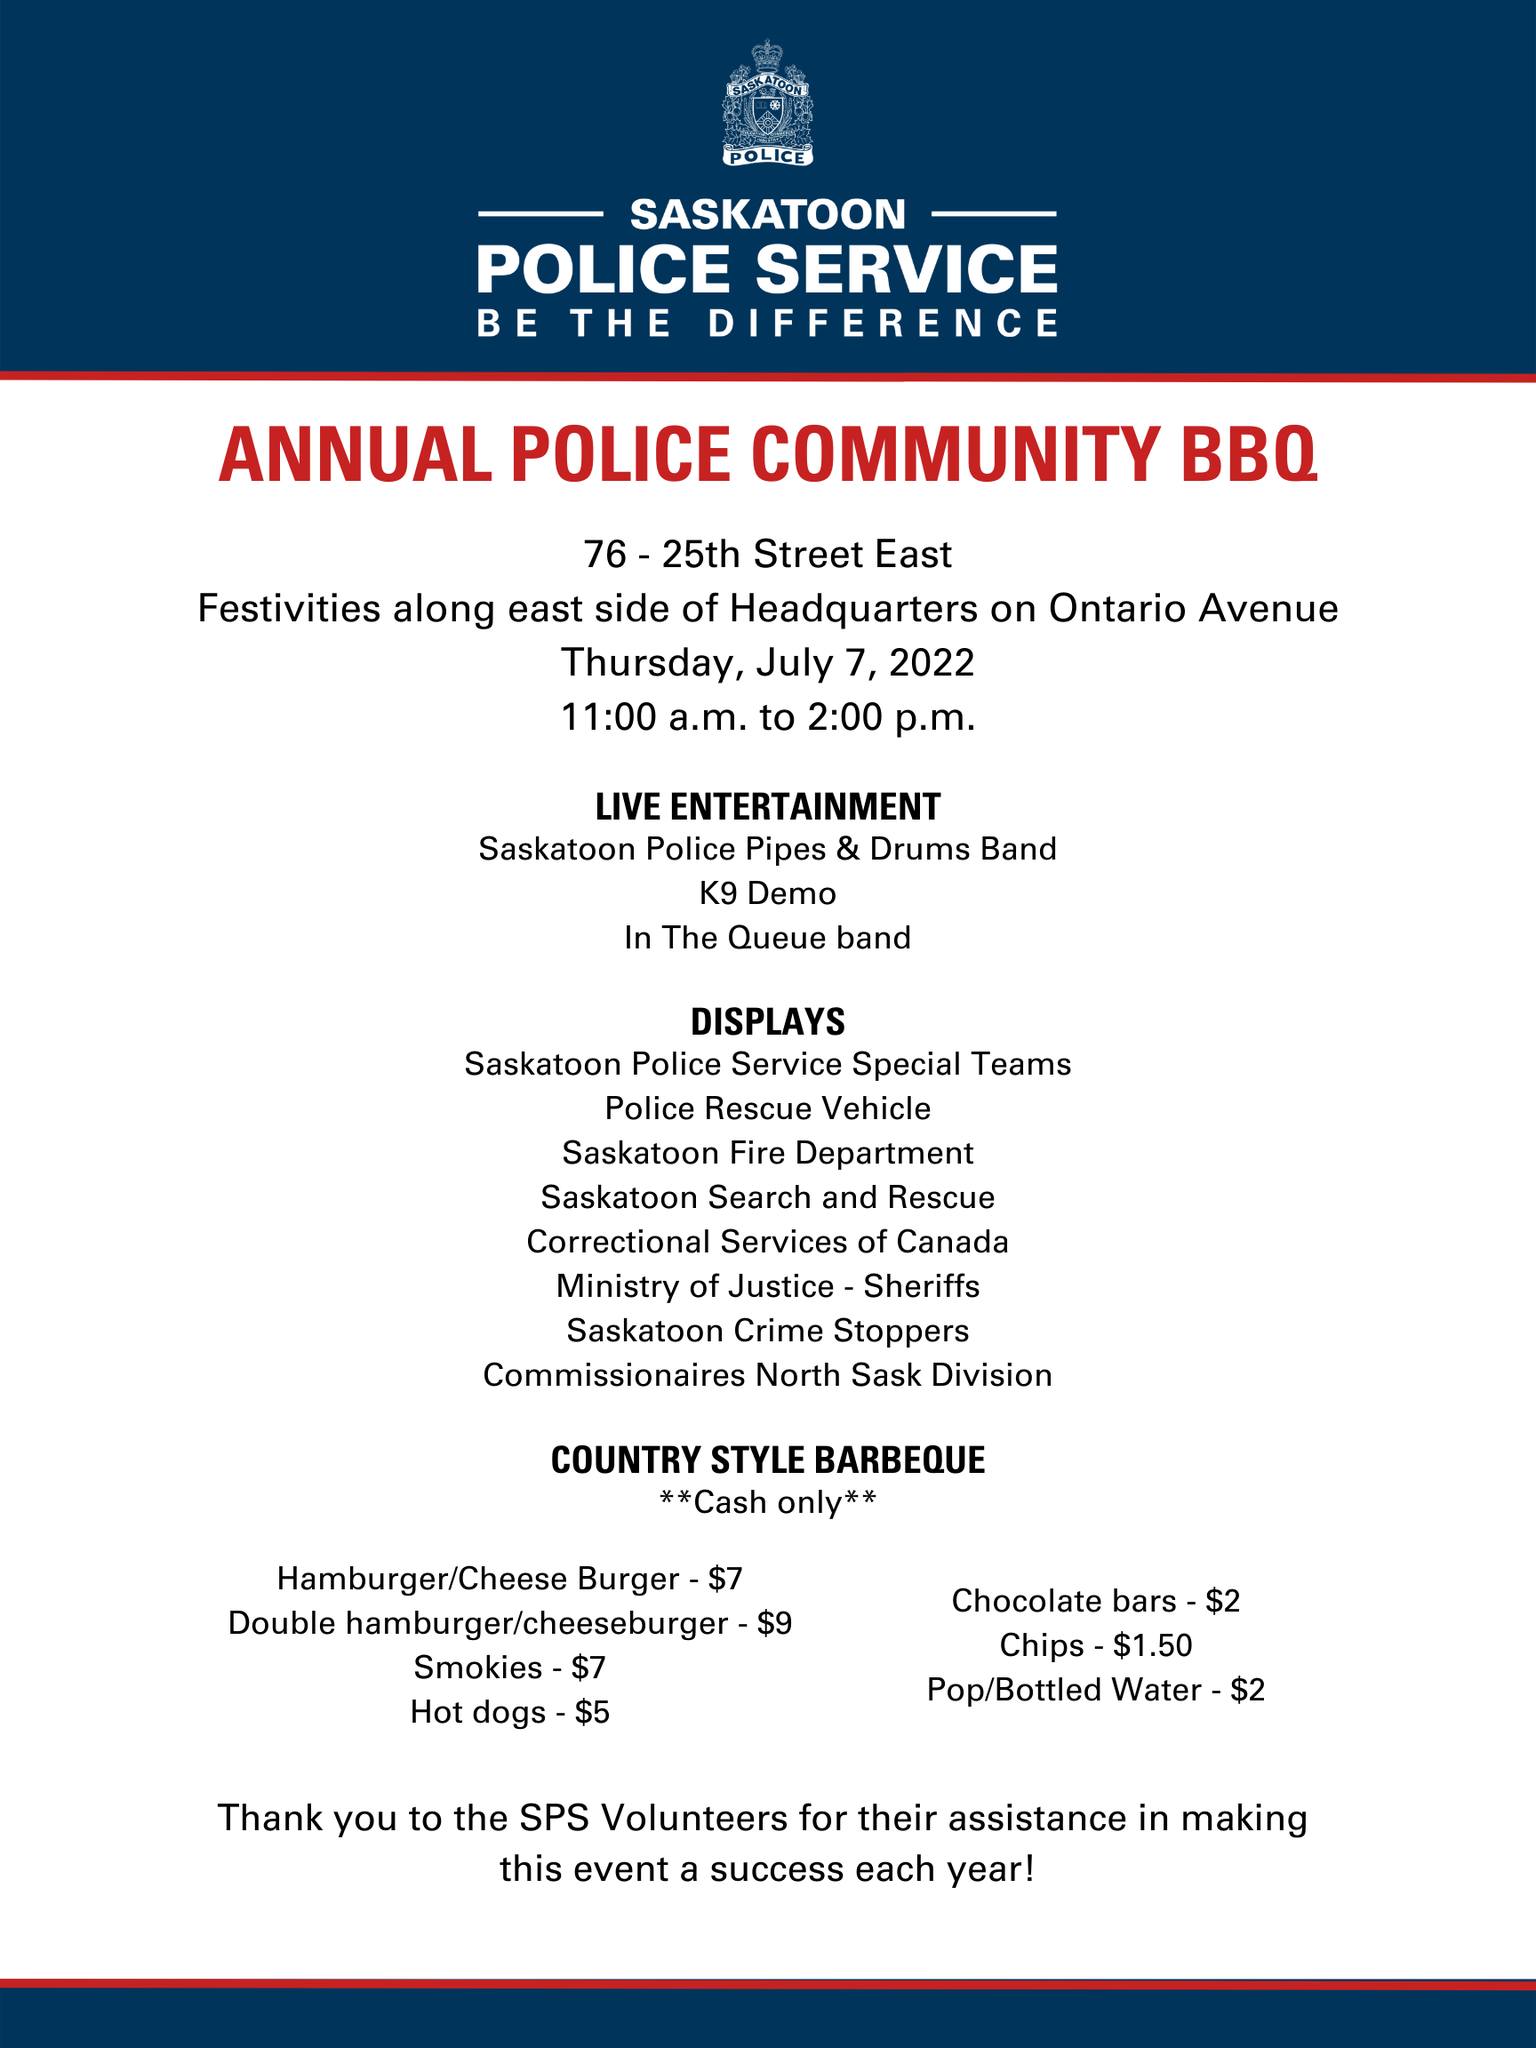 BBQ communautaire annuel de la police